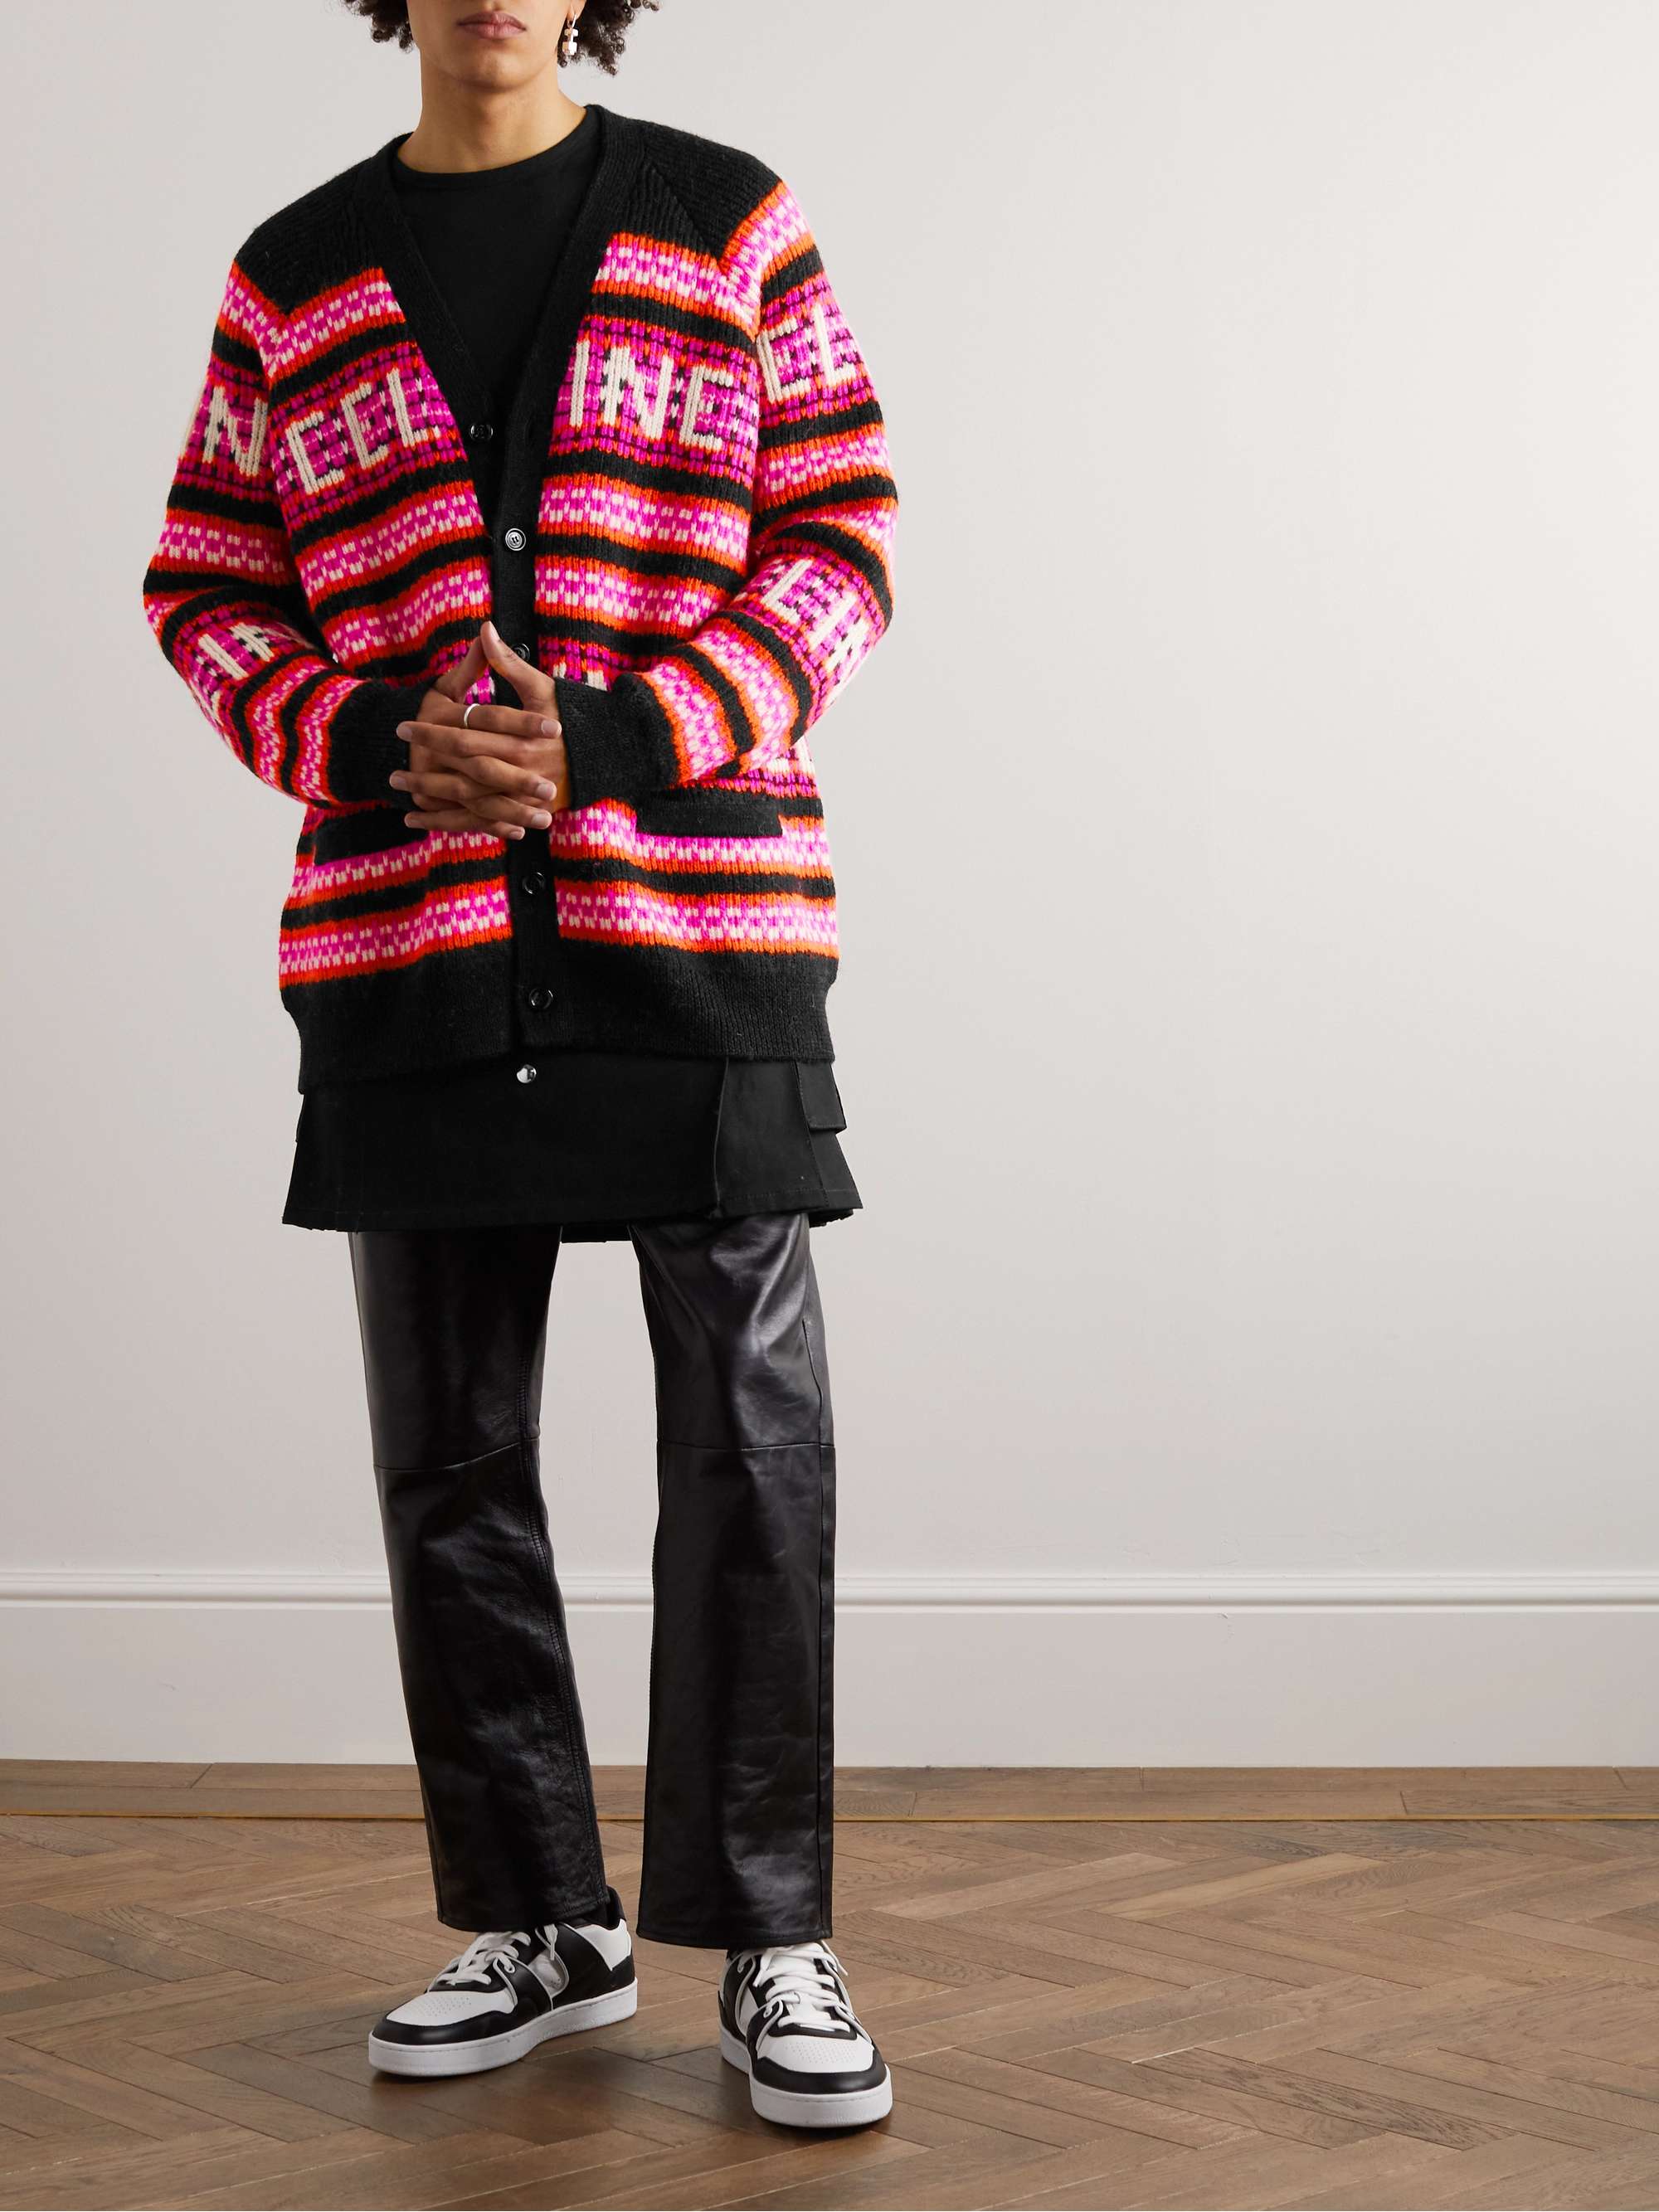 CELINE HOMME Jacquard-Knit Wool Cardigan